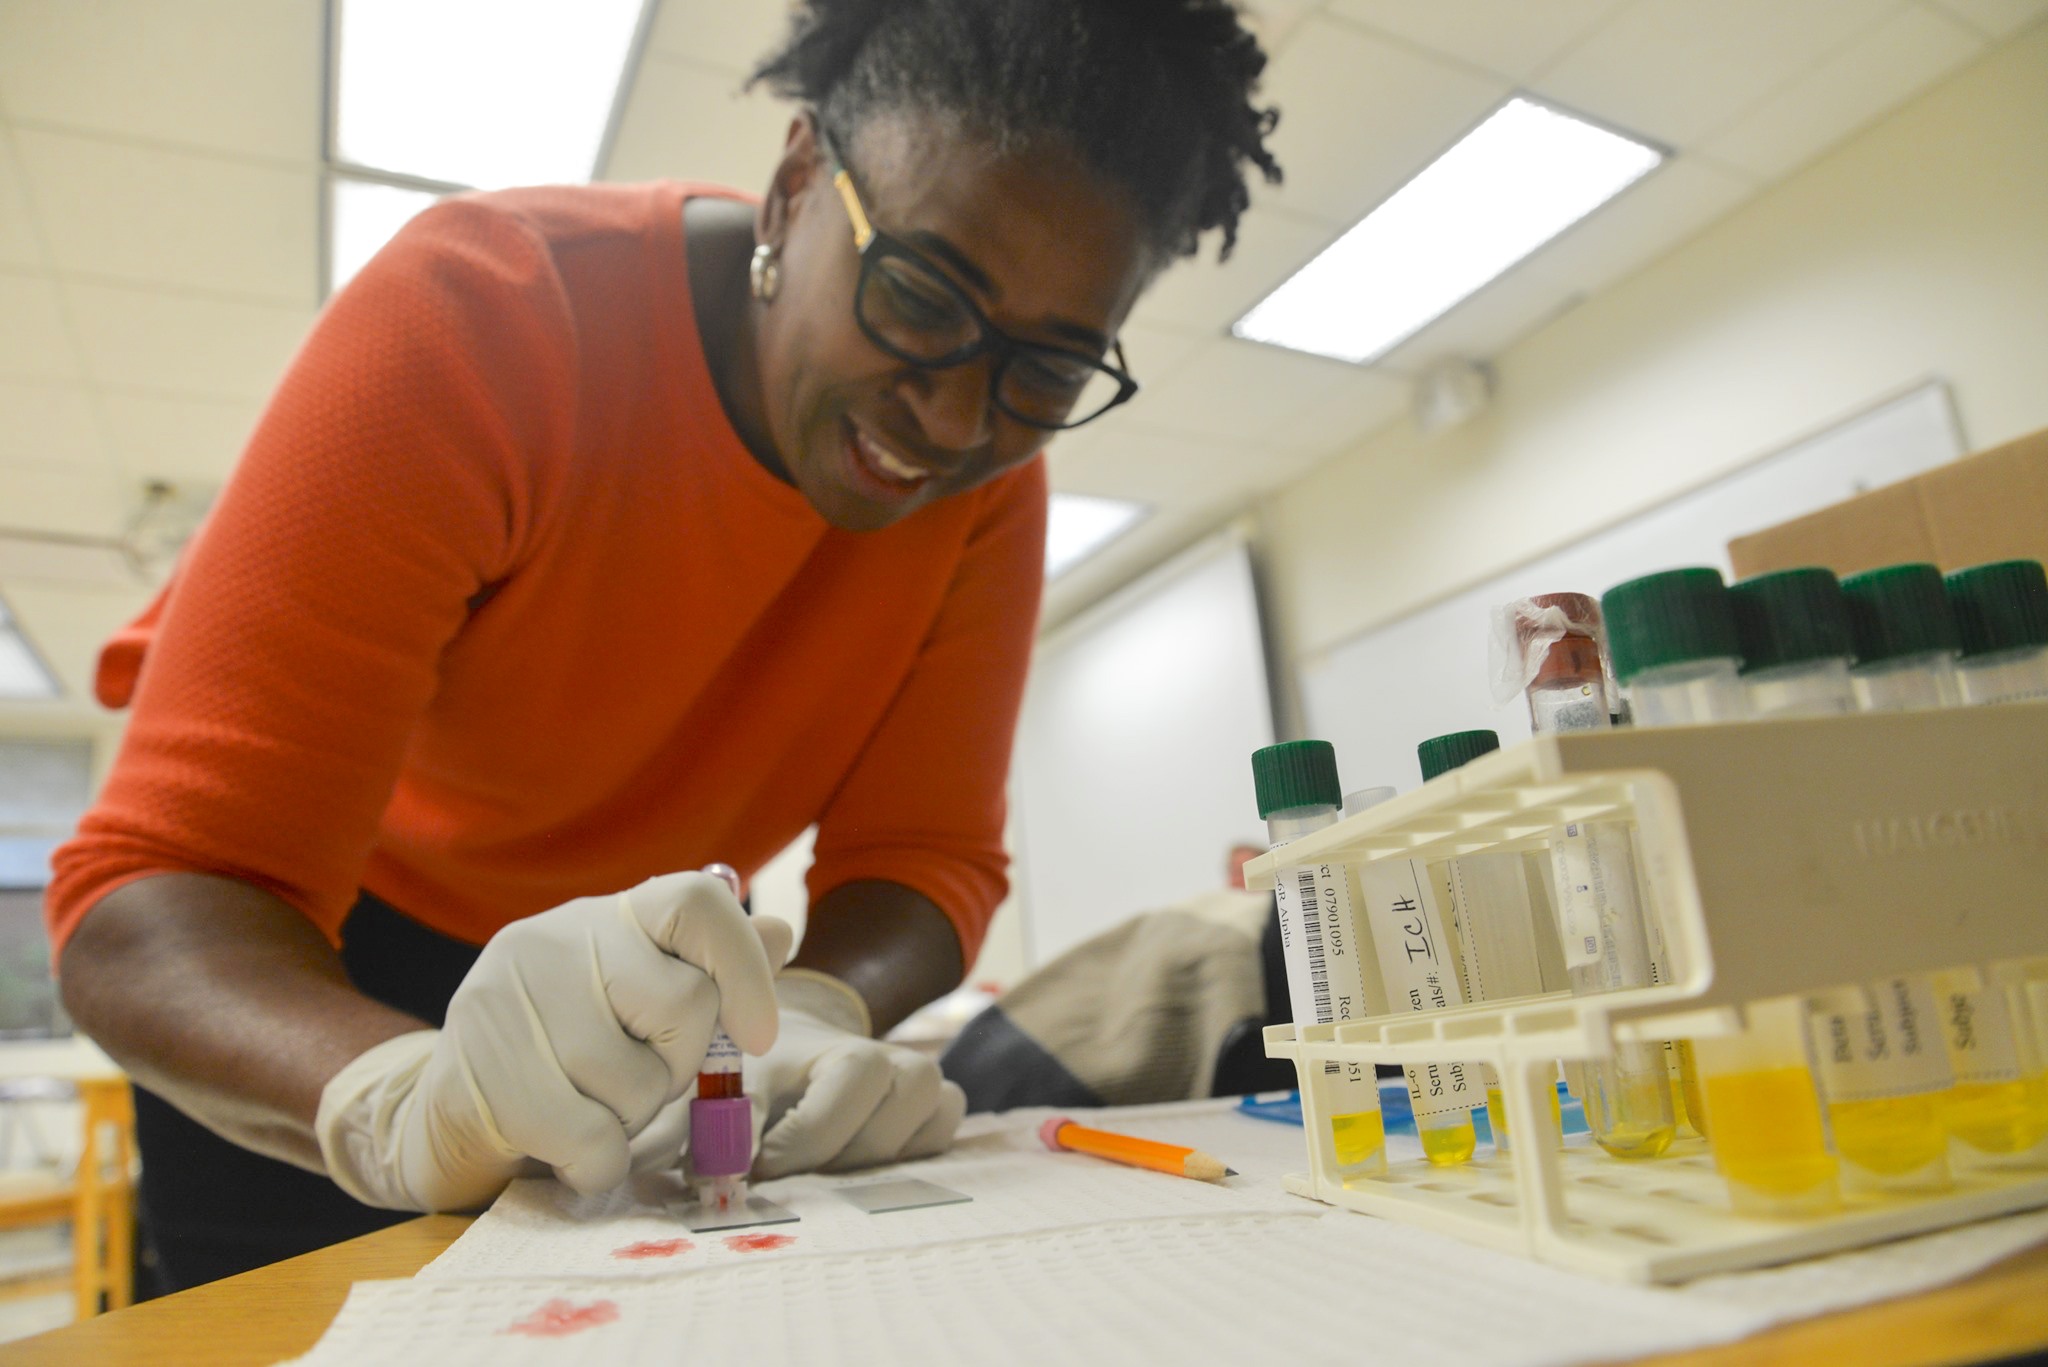 student wearing gloves leaning over desk recording blood sample in little tubes